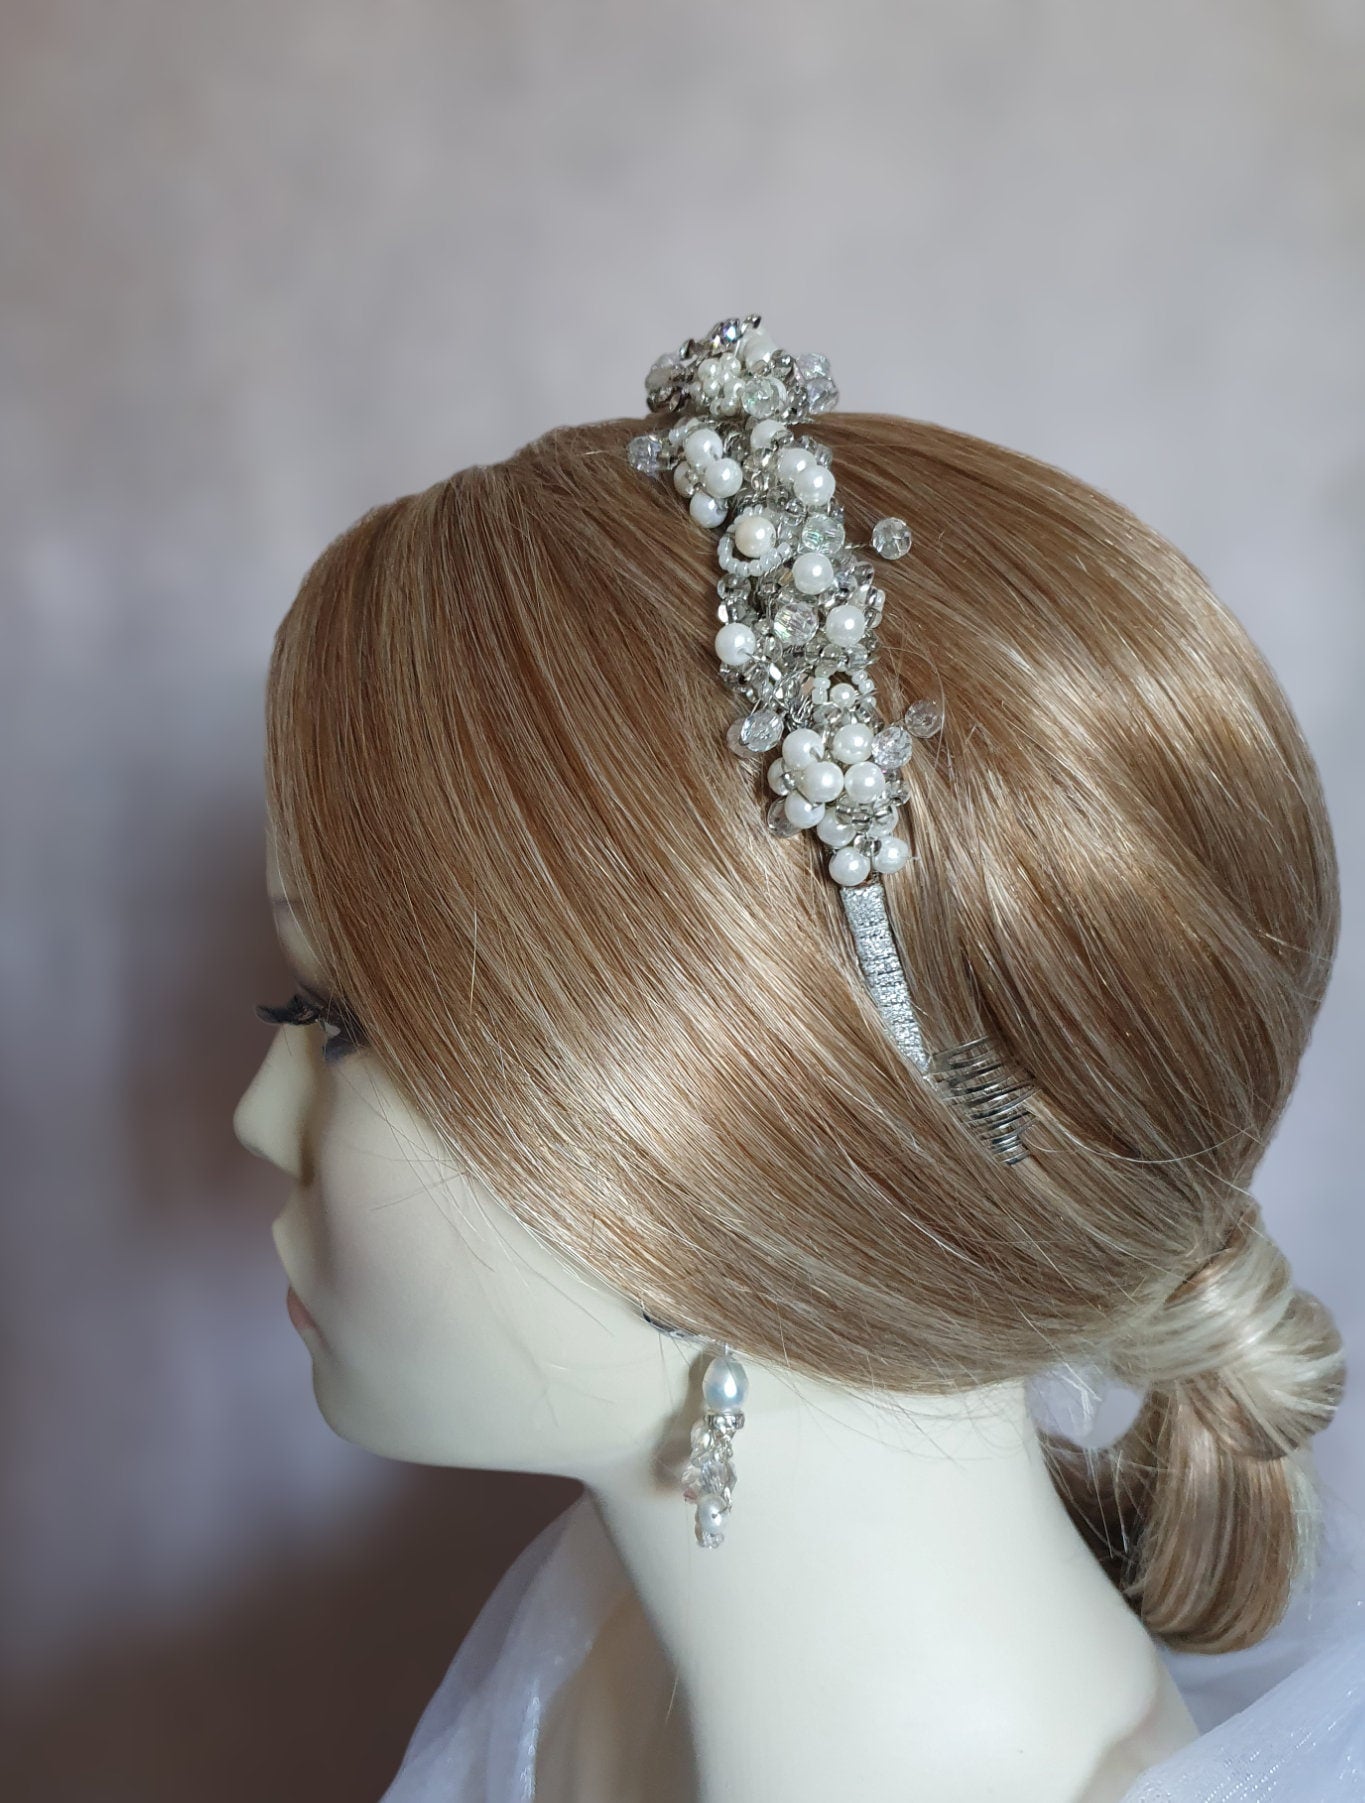 Wedding tiara with crystal stones and pearls, handmade, bridal tiara, bridal diadem, bridal tiara, ladies tiara, special event